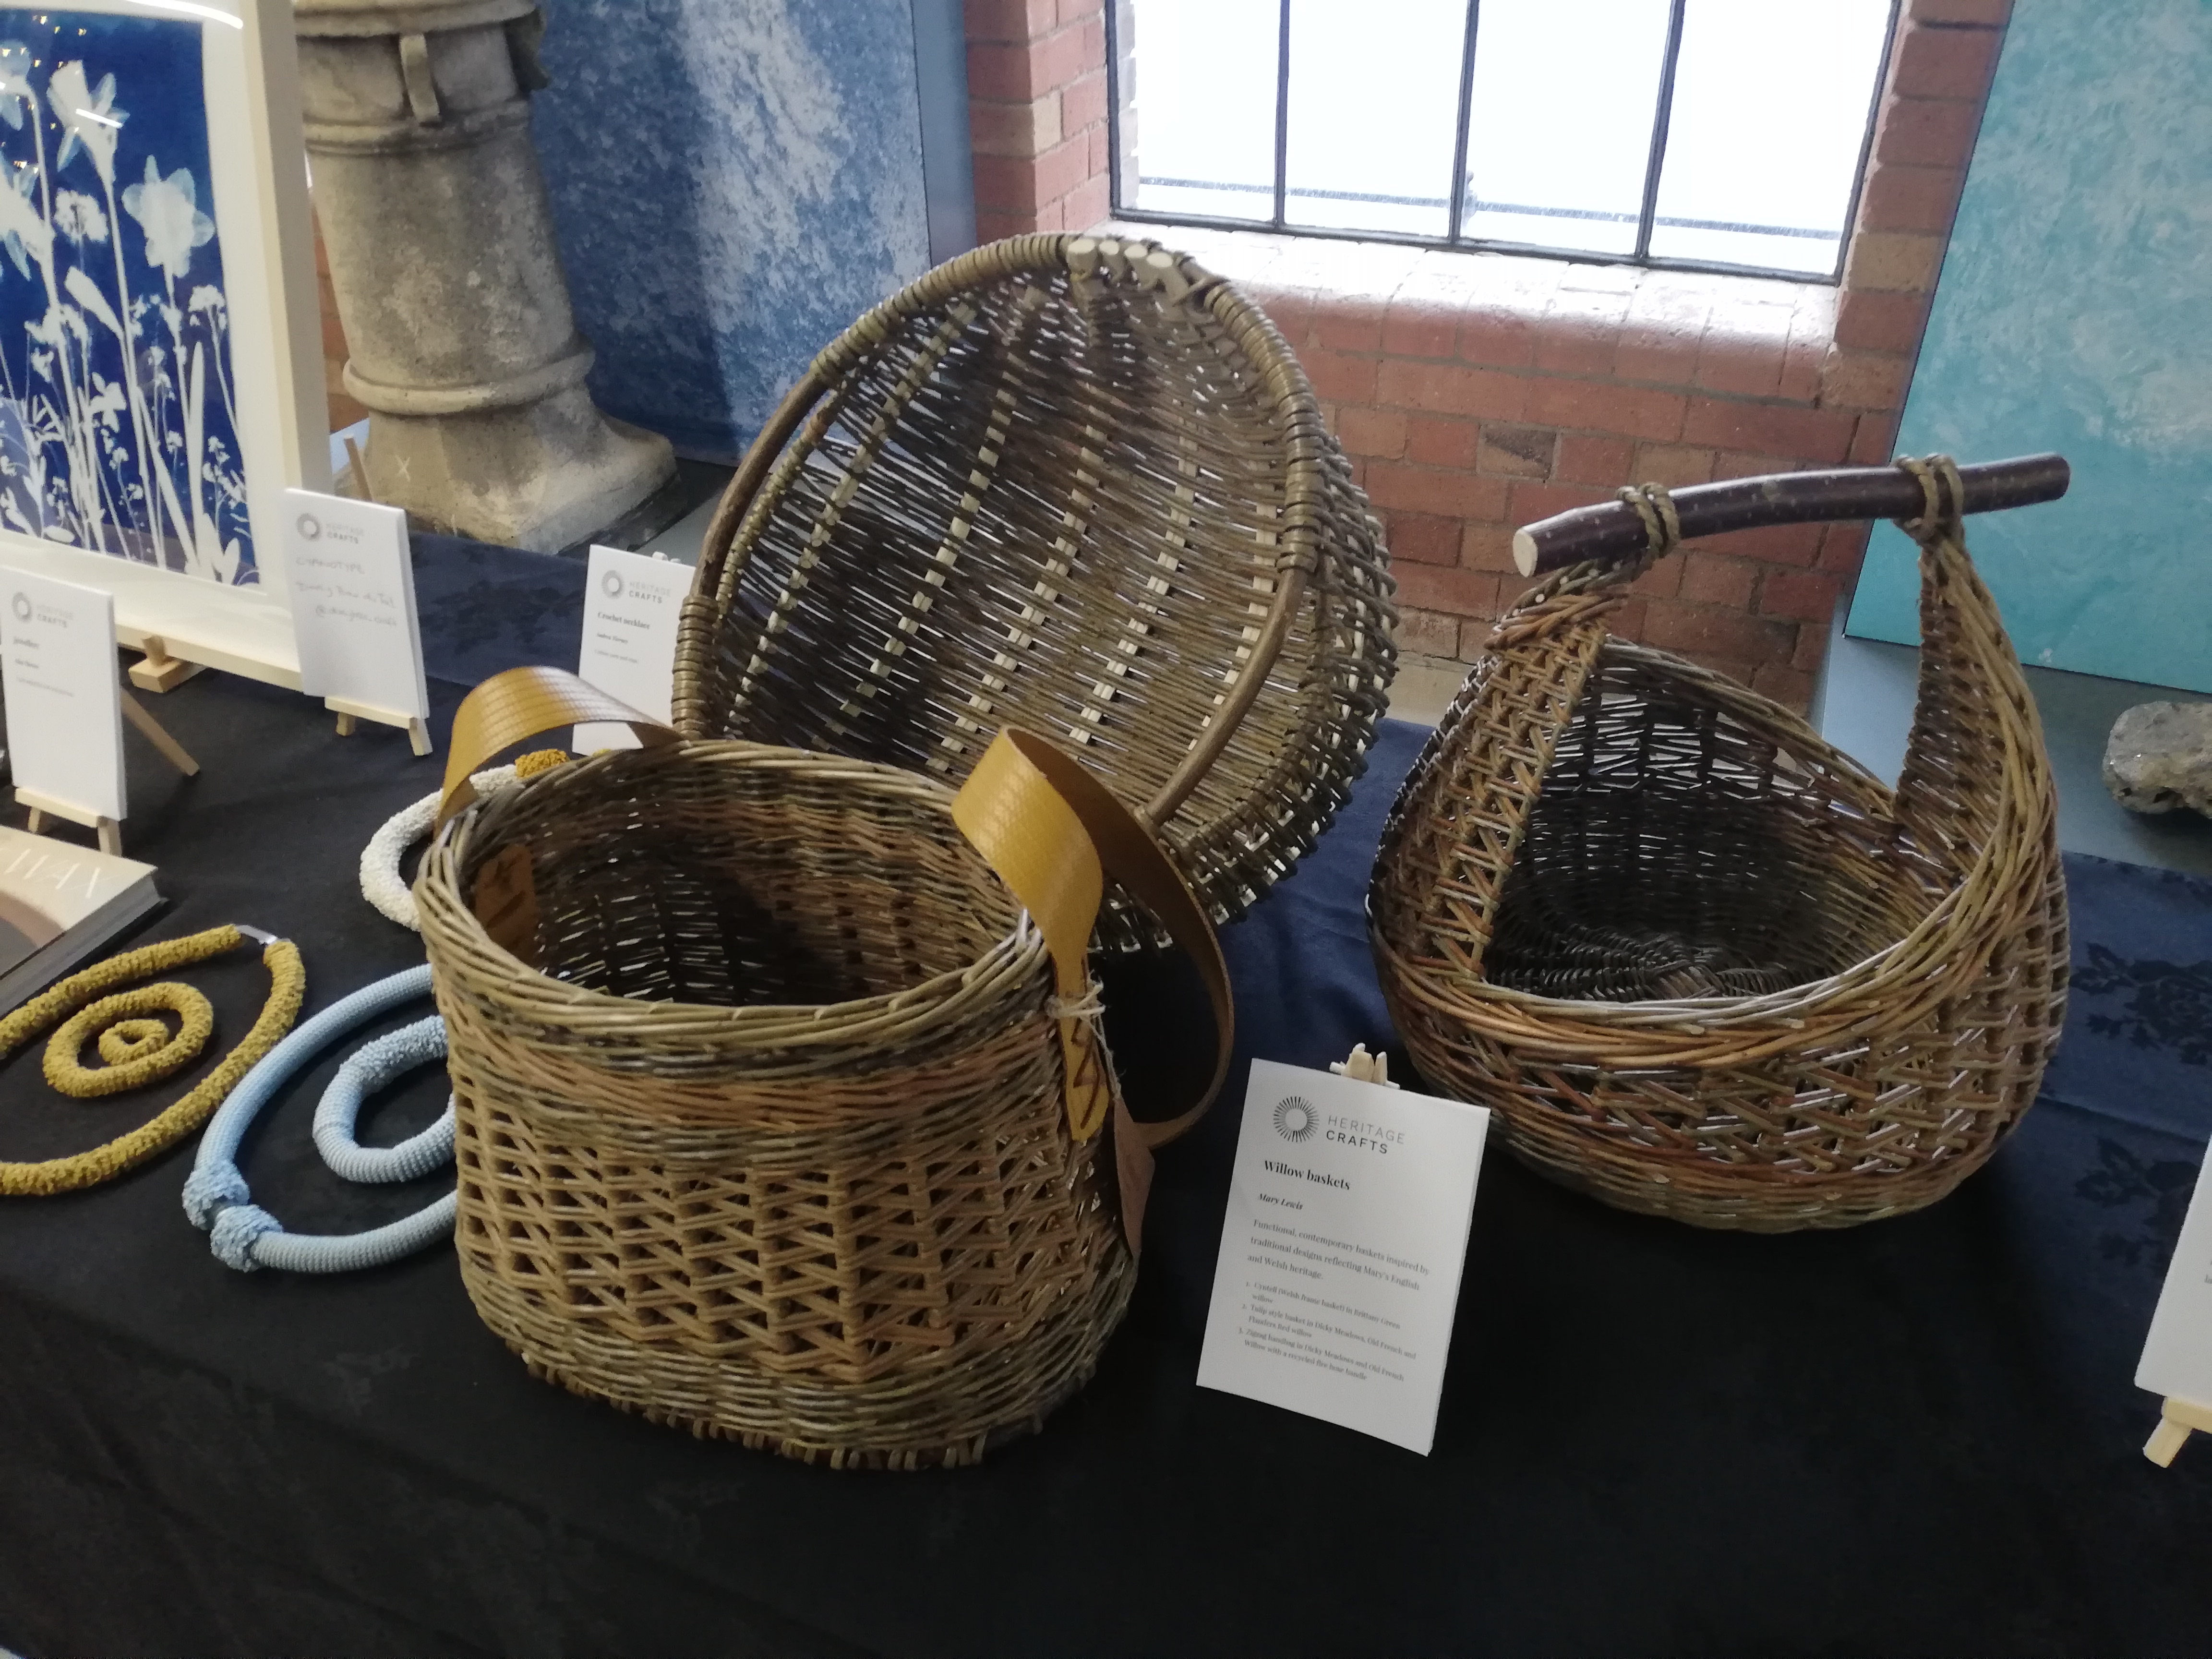 A selection of handmade baskets